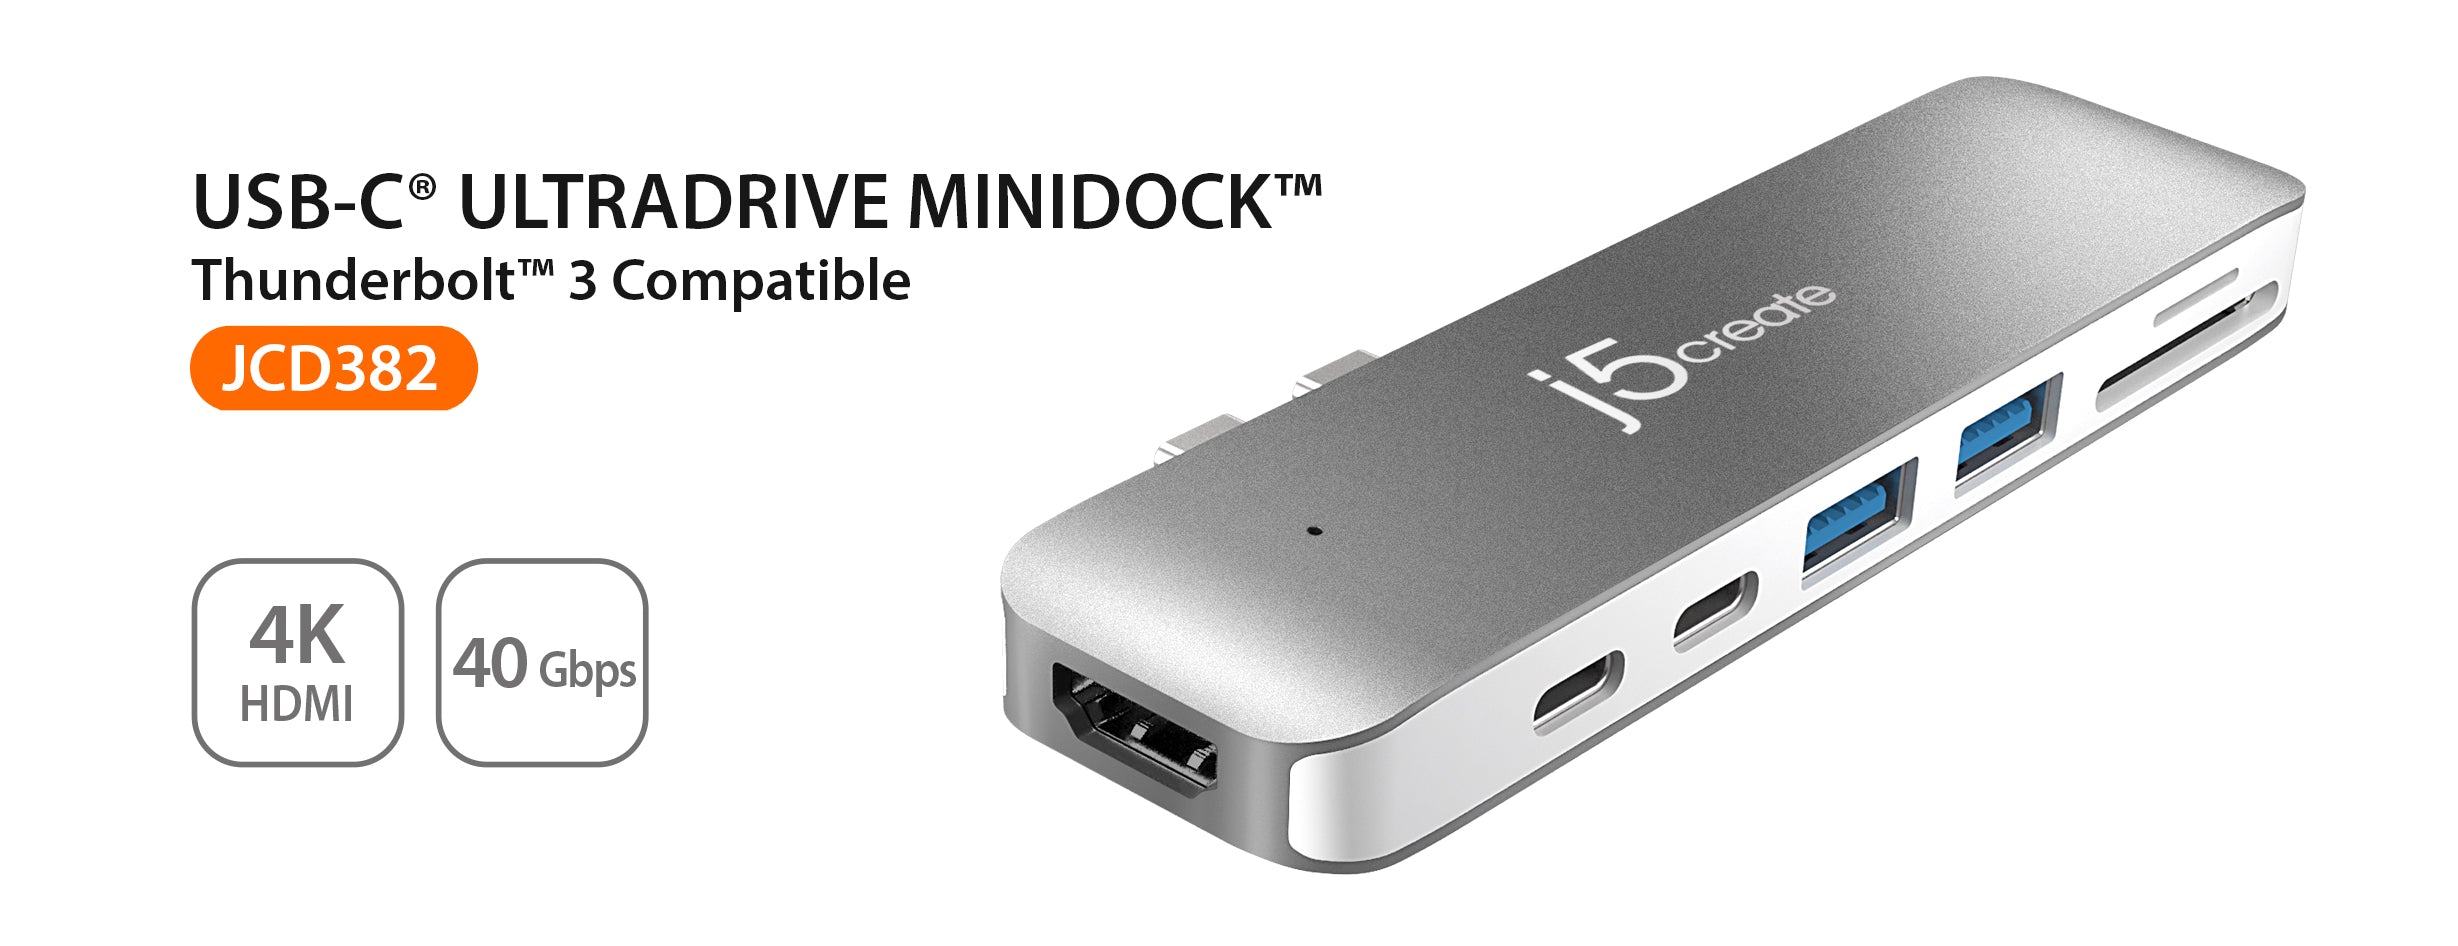 USB-C™ ULTRADRIVE MINIDOCK™ – j5create